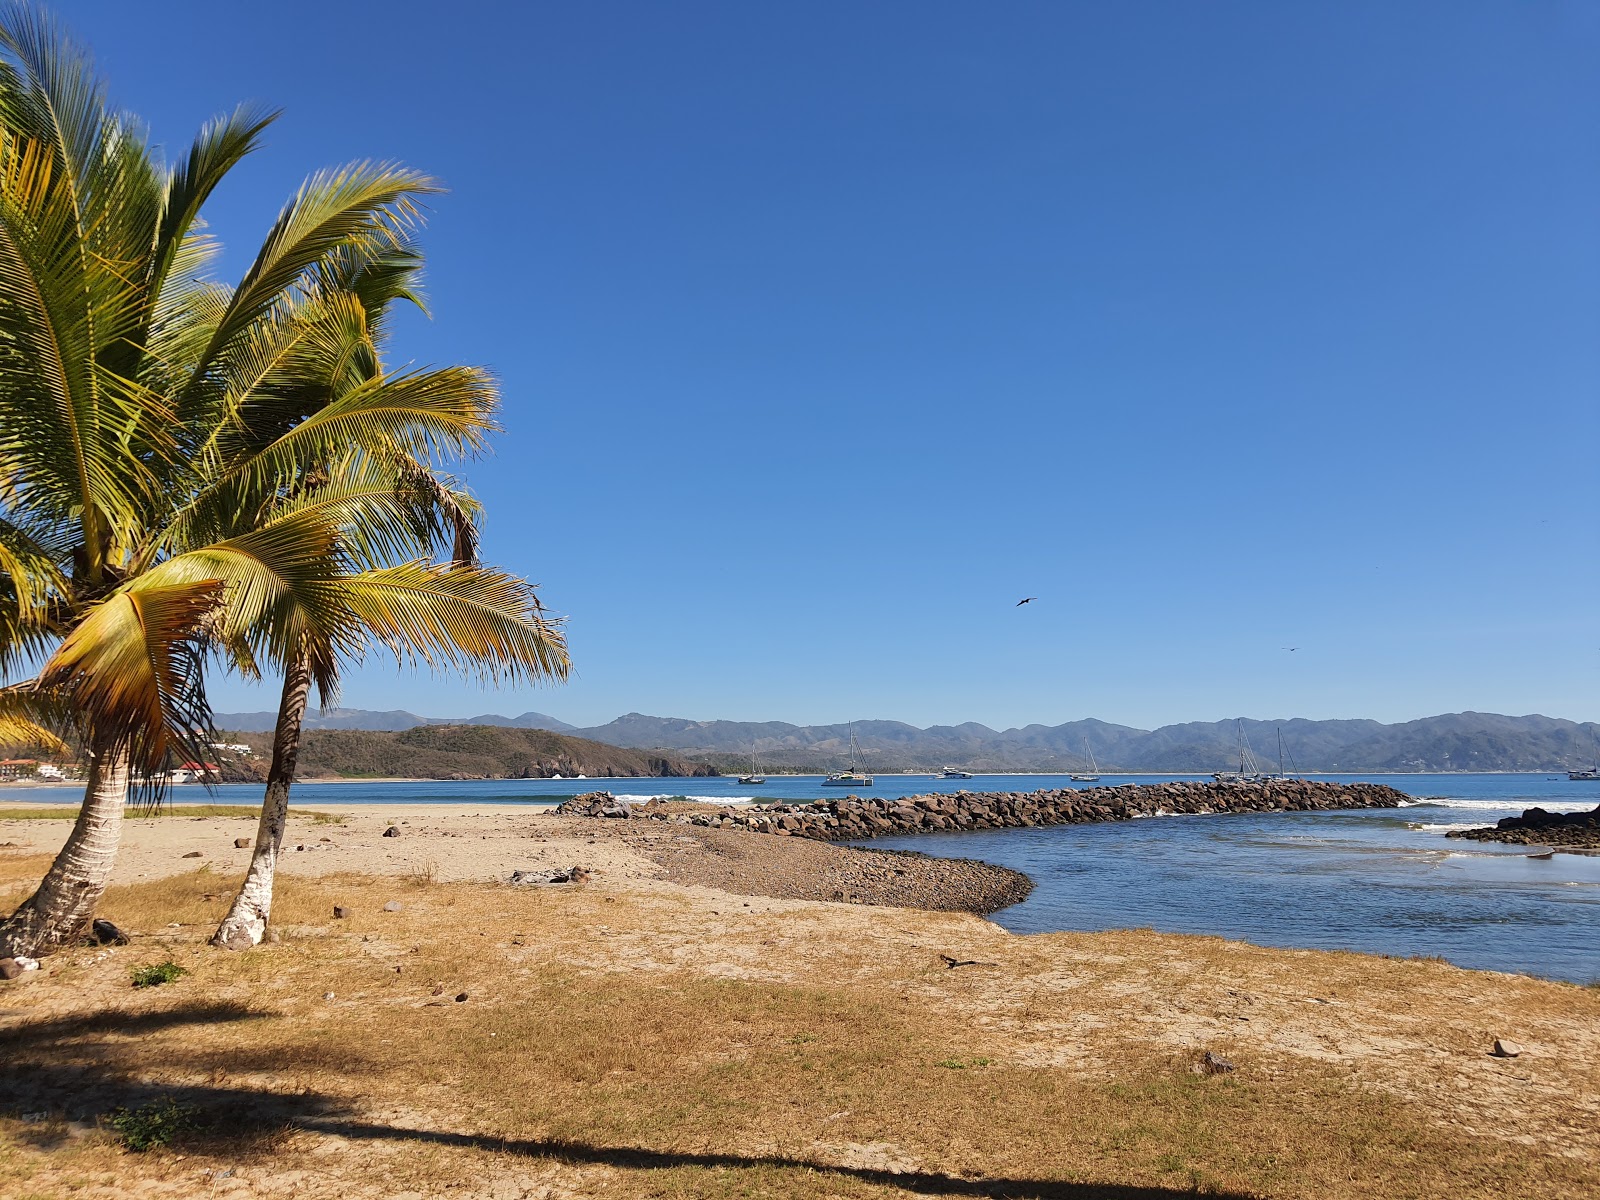 Photo of Boca De Iguanas II - popular place among relax connoisseurs